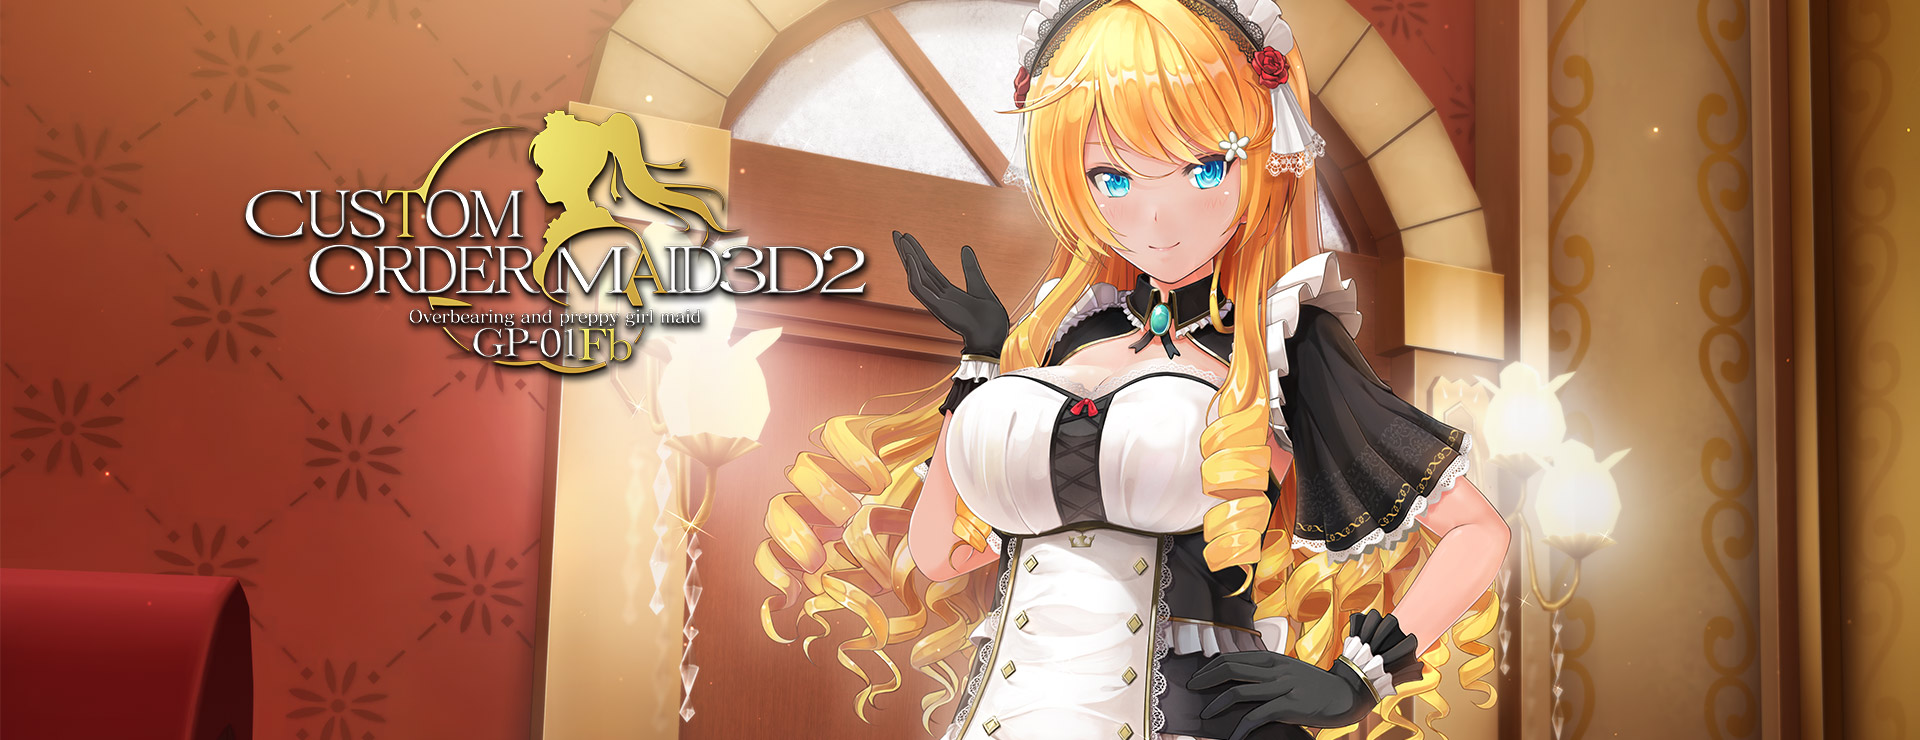 Custom Order Maid 3D2: Overbearing and Preppy Girl Maid GP-01Fb - シミュレーション ゲーム